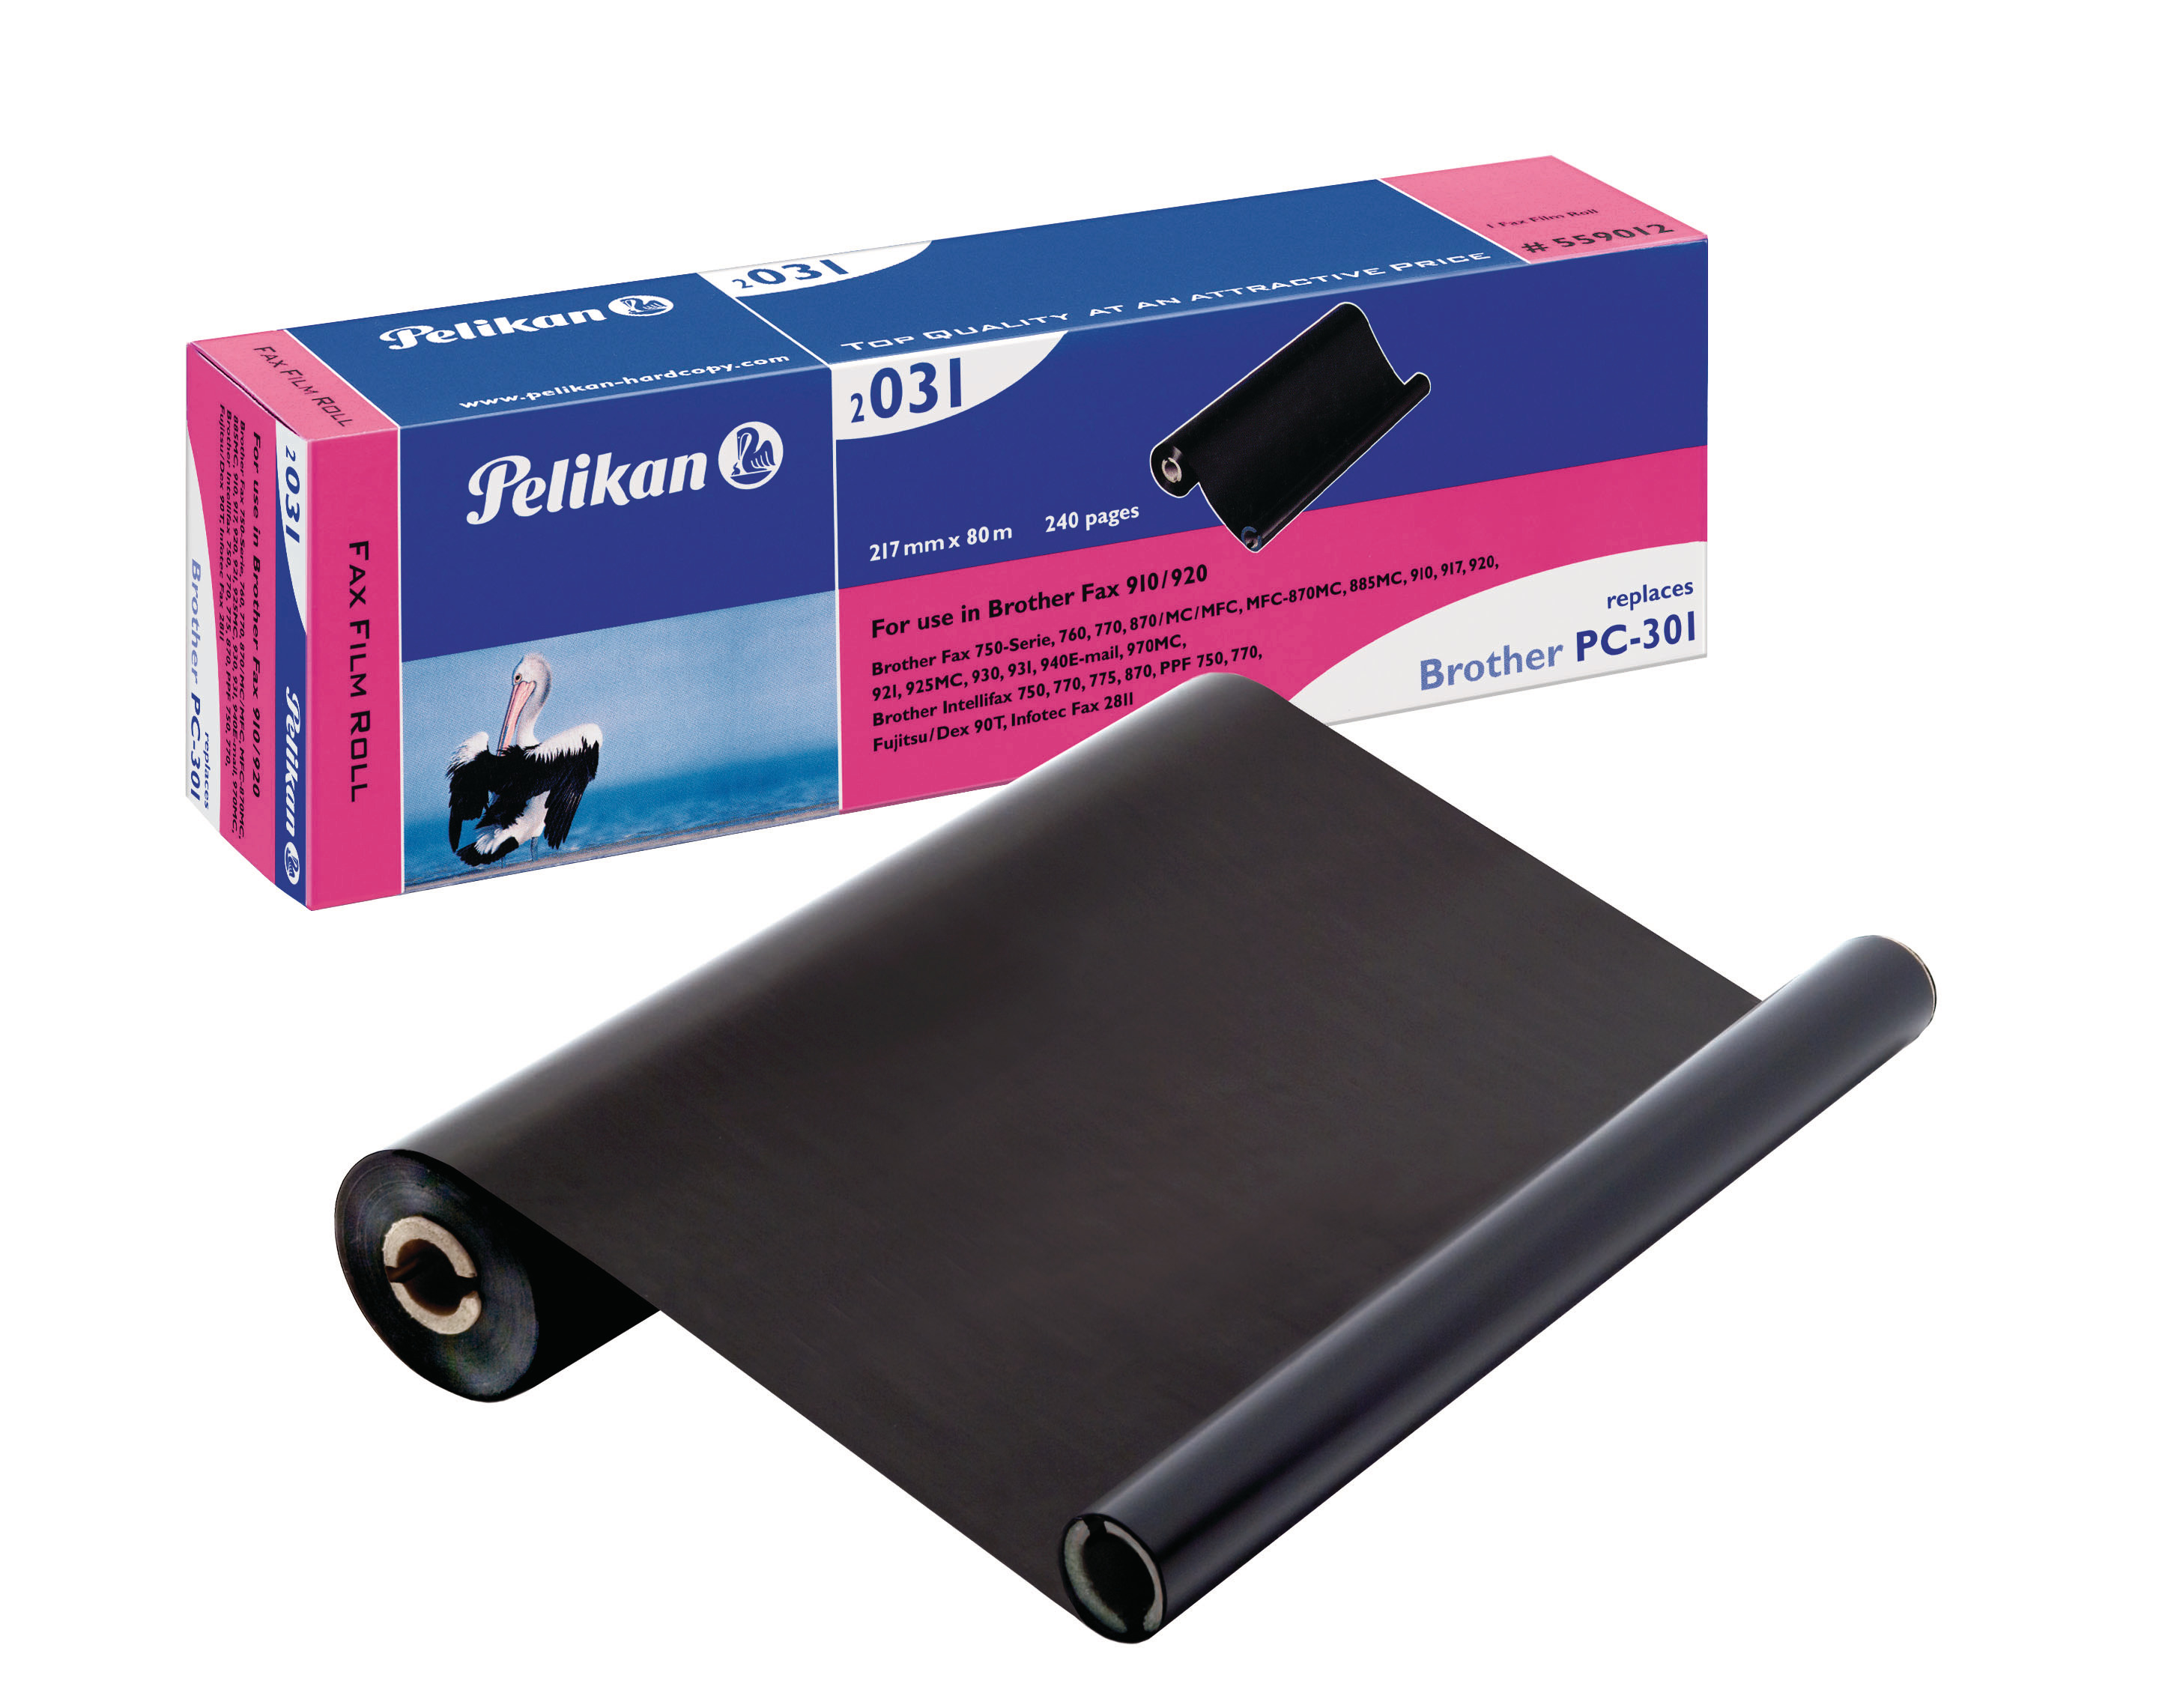 PELIKAN TTR-Refill schwarz PC-301 zu Brother Fax 750 217mm/80m